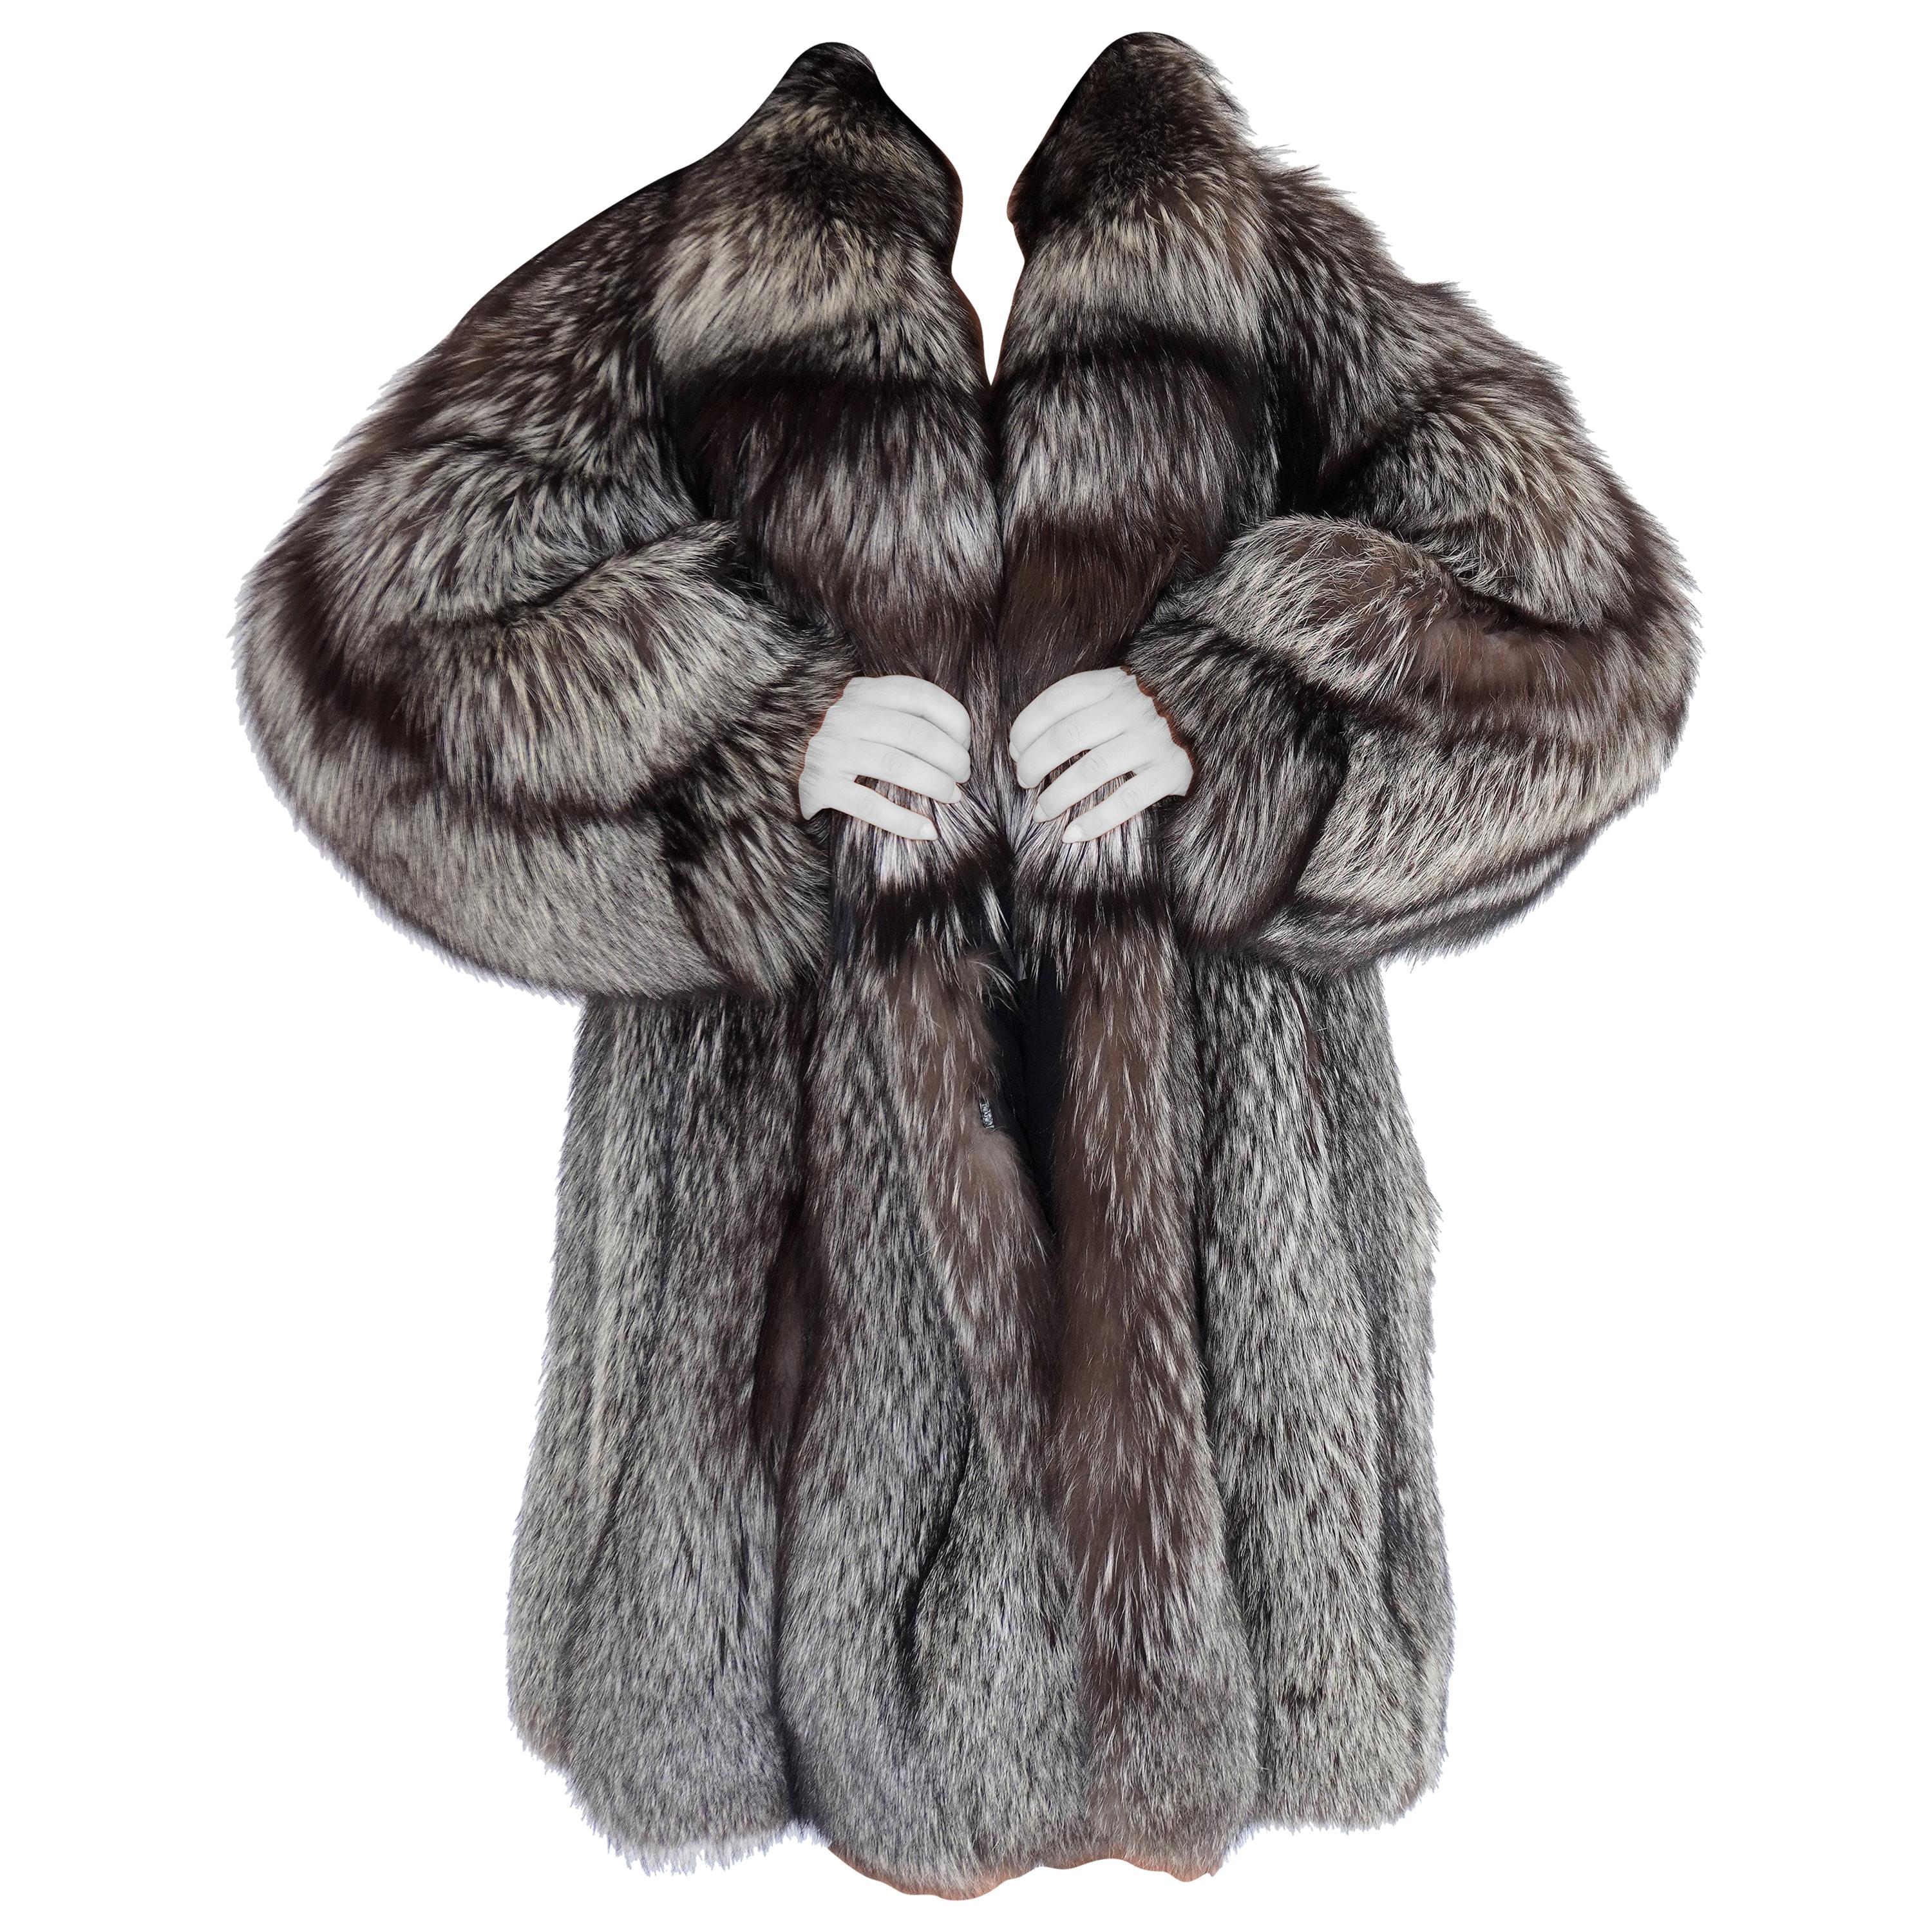 Brand new Siberian silver fox fur coat size 12